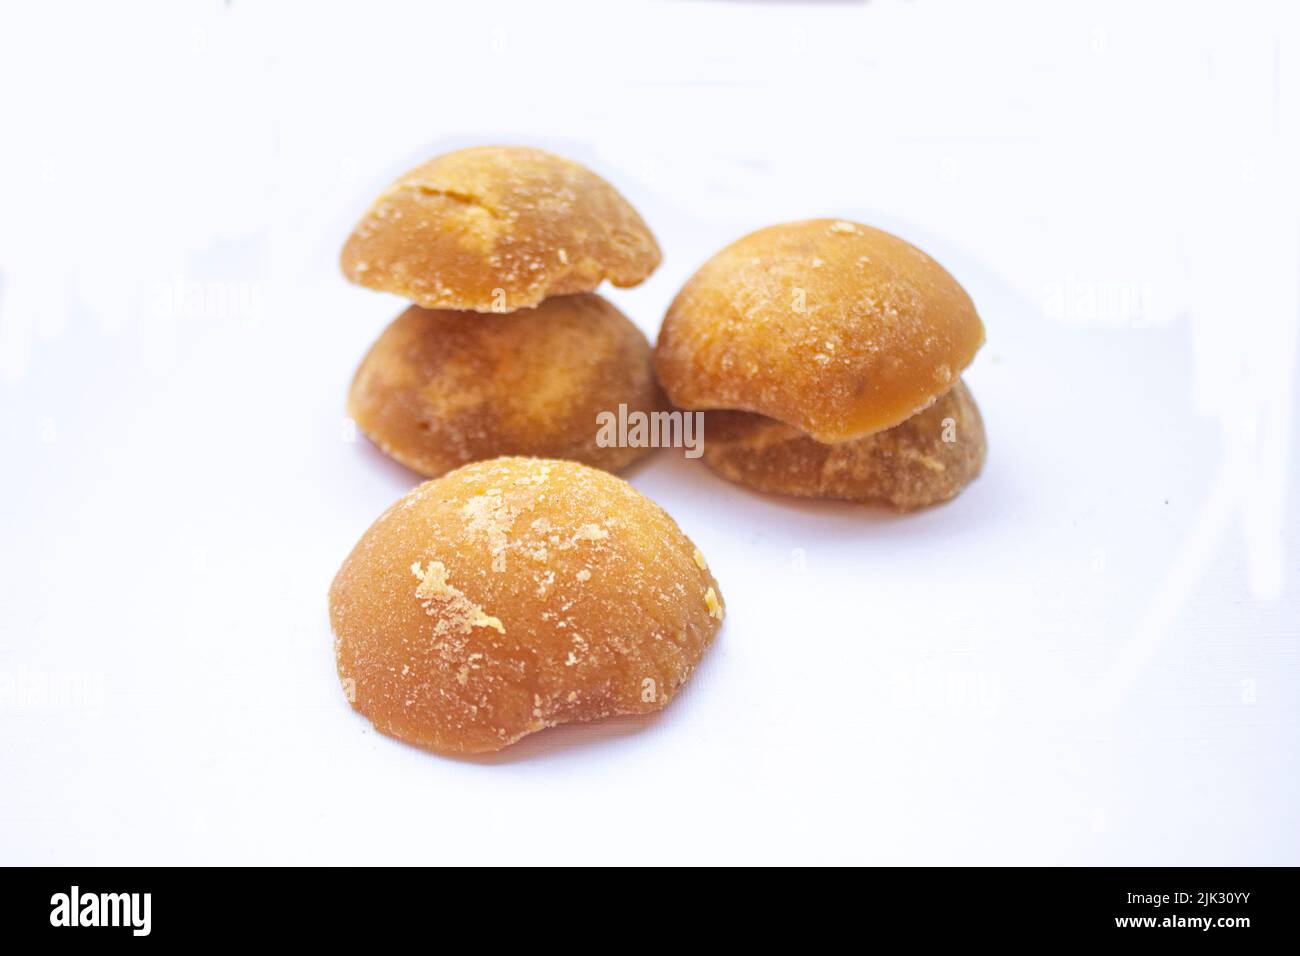 brown sugar or java sugar or palm sugar or gula jawa isolated on white background. Top view. Flat lay. sweet Stock Photo